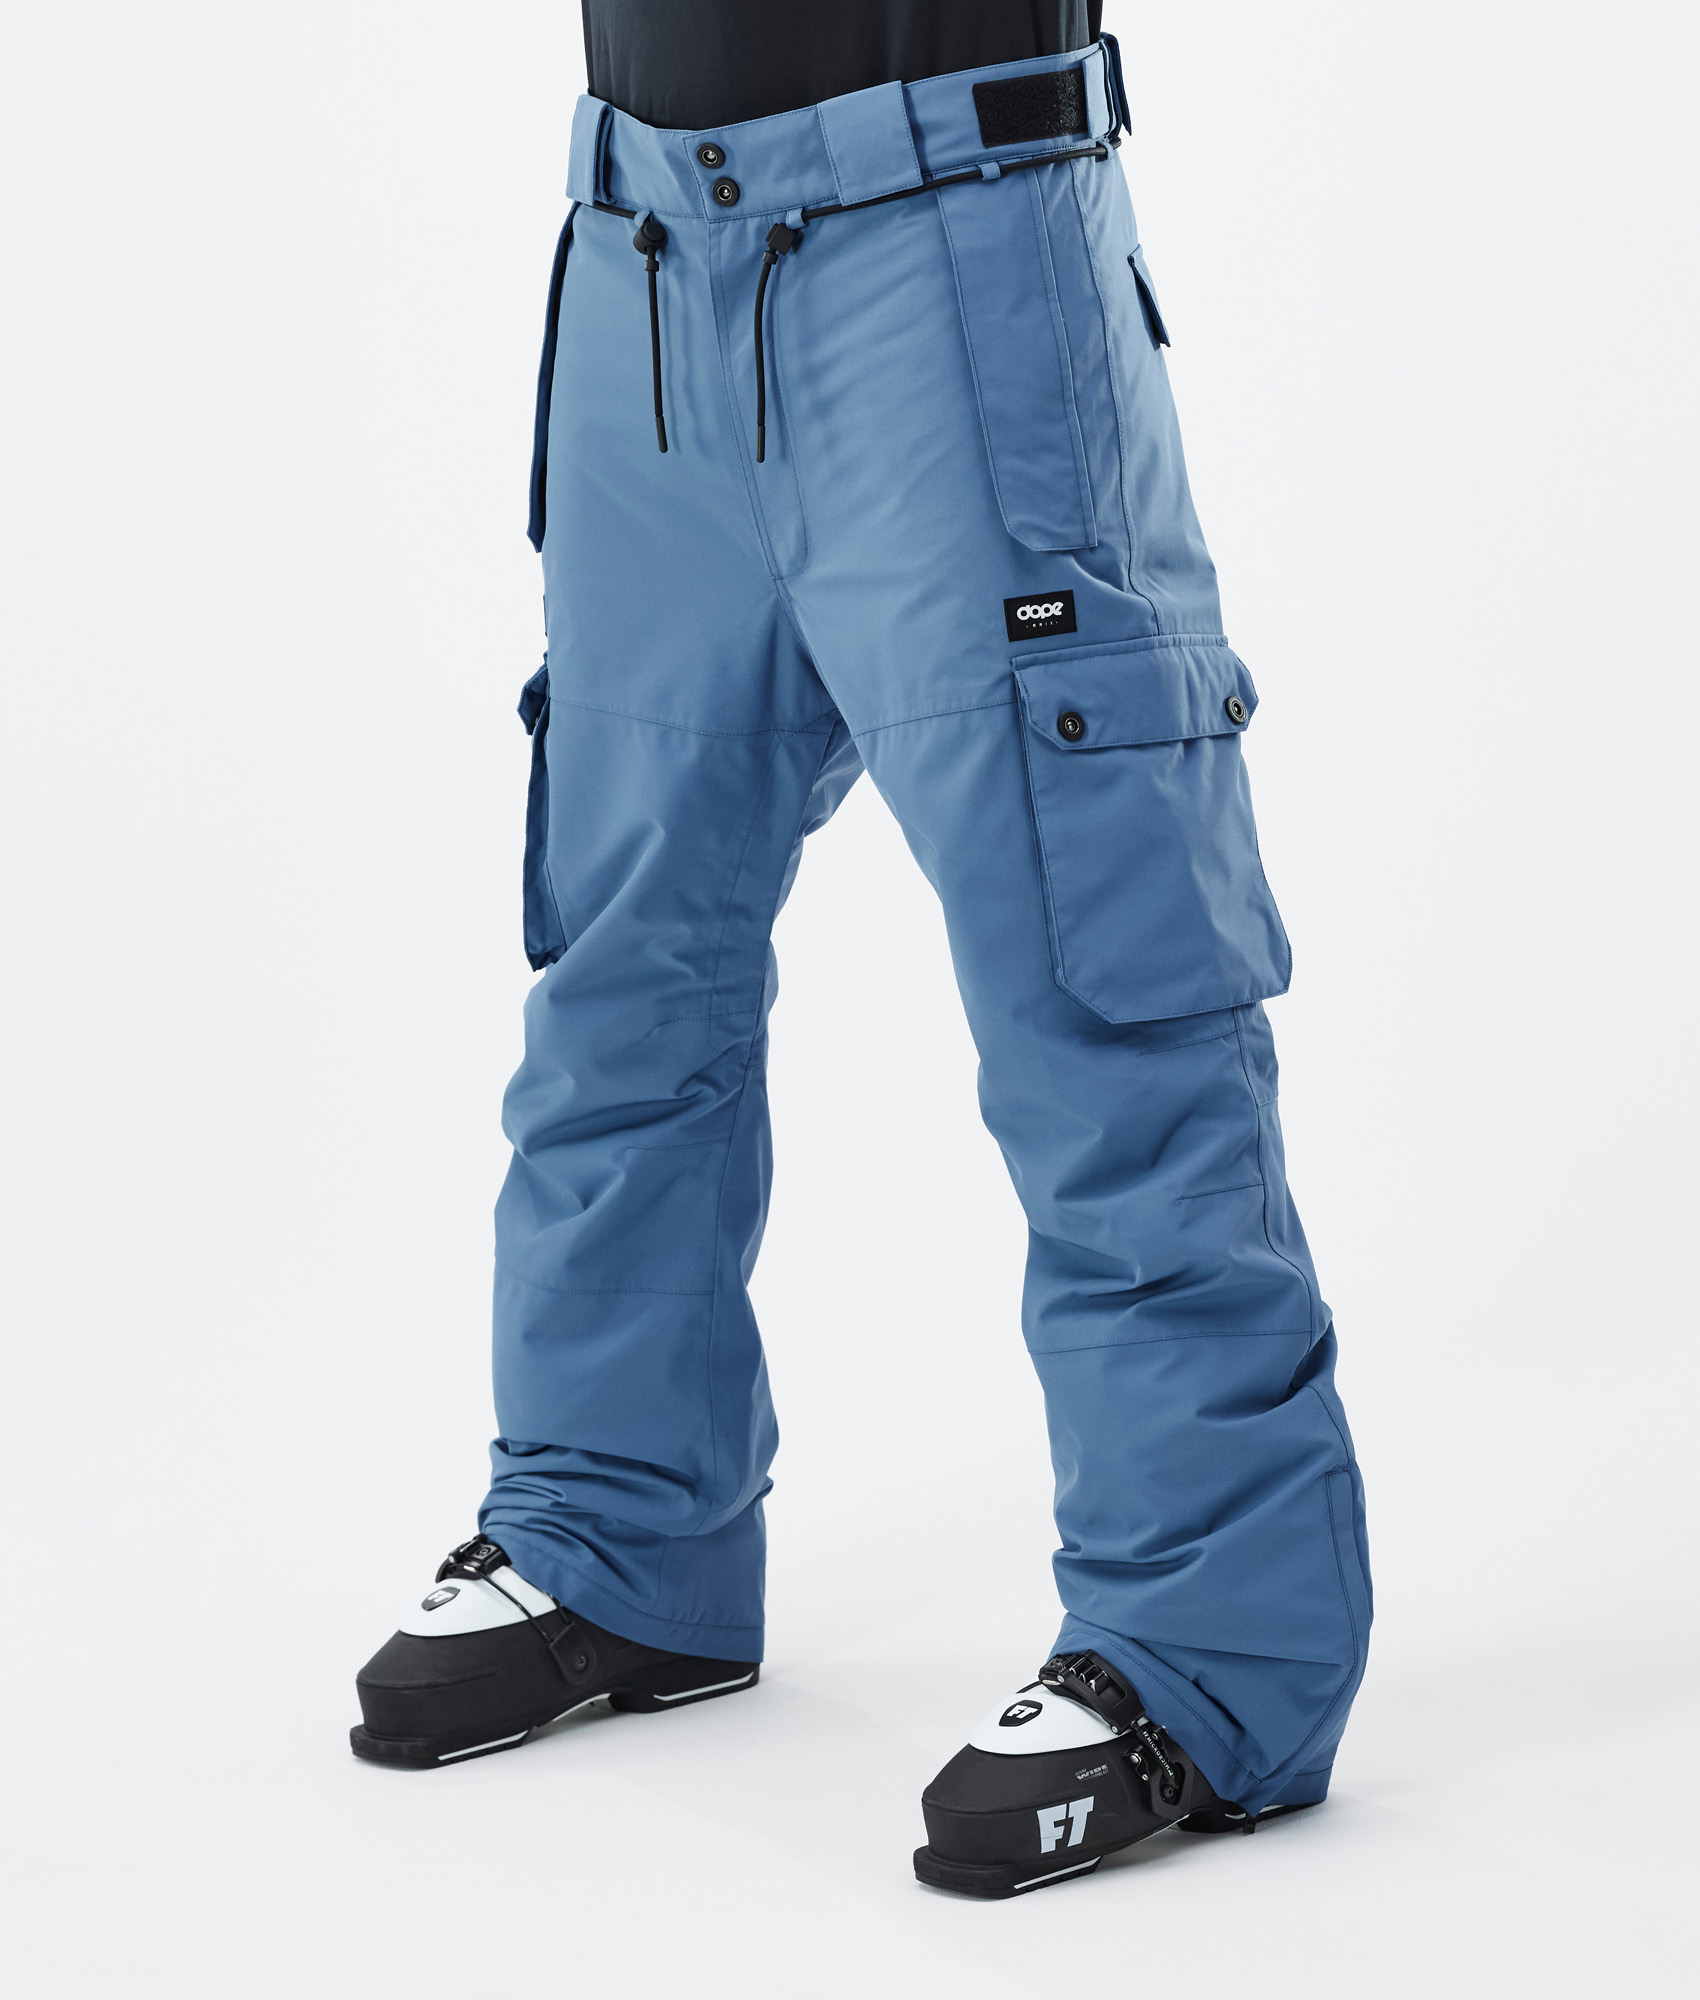 Vtg. Nils Skiwear Snow Pants Mens 34 Blue With Belt.Nylon Pre Owned